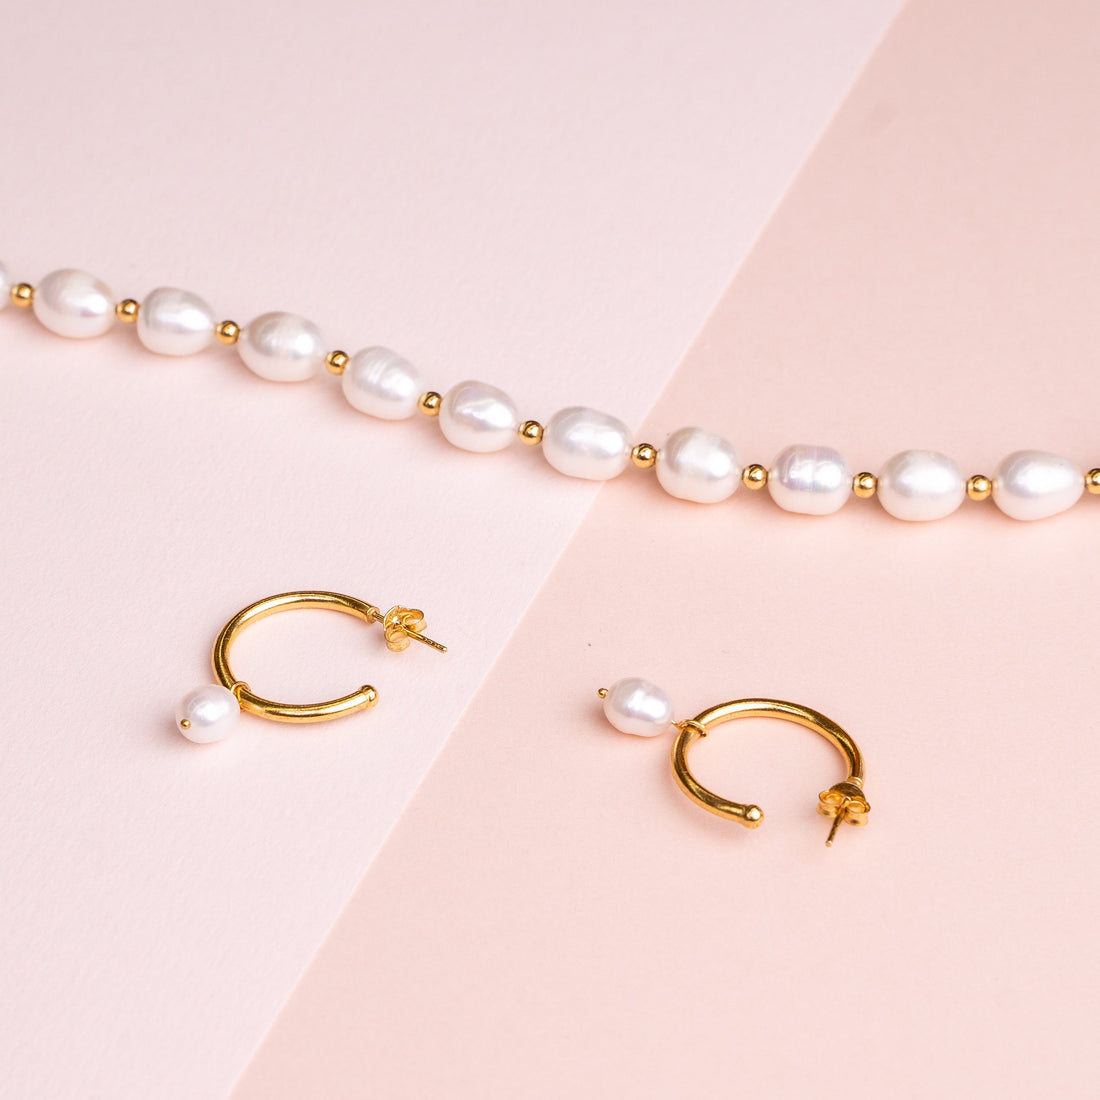 Pearl jewelry trend